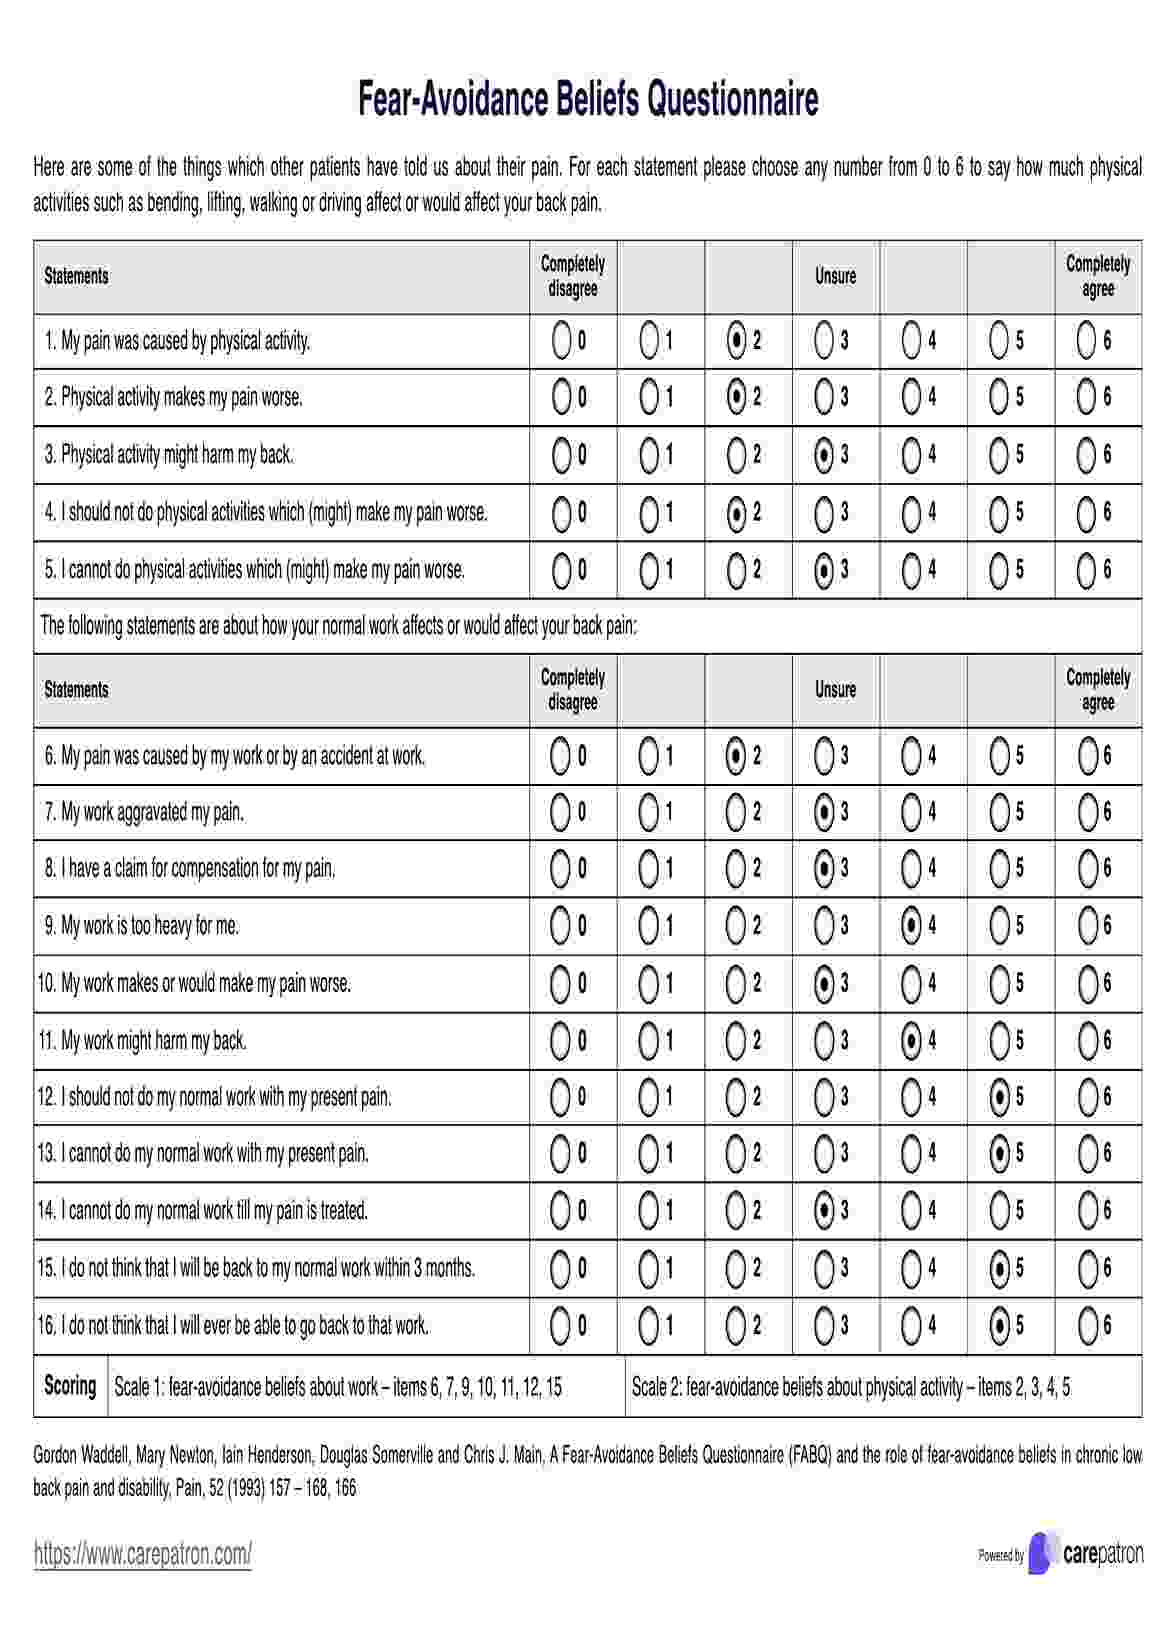 Fear-Avoidance Beliefs Questionnaire PDF Example